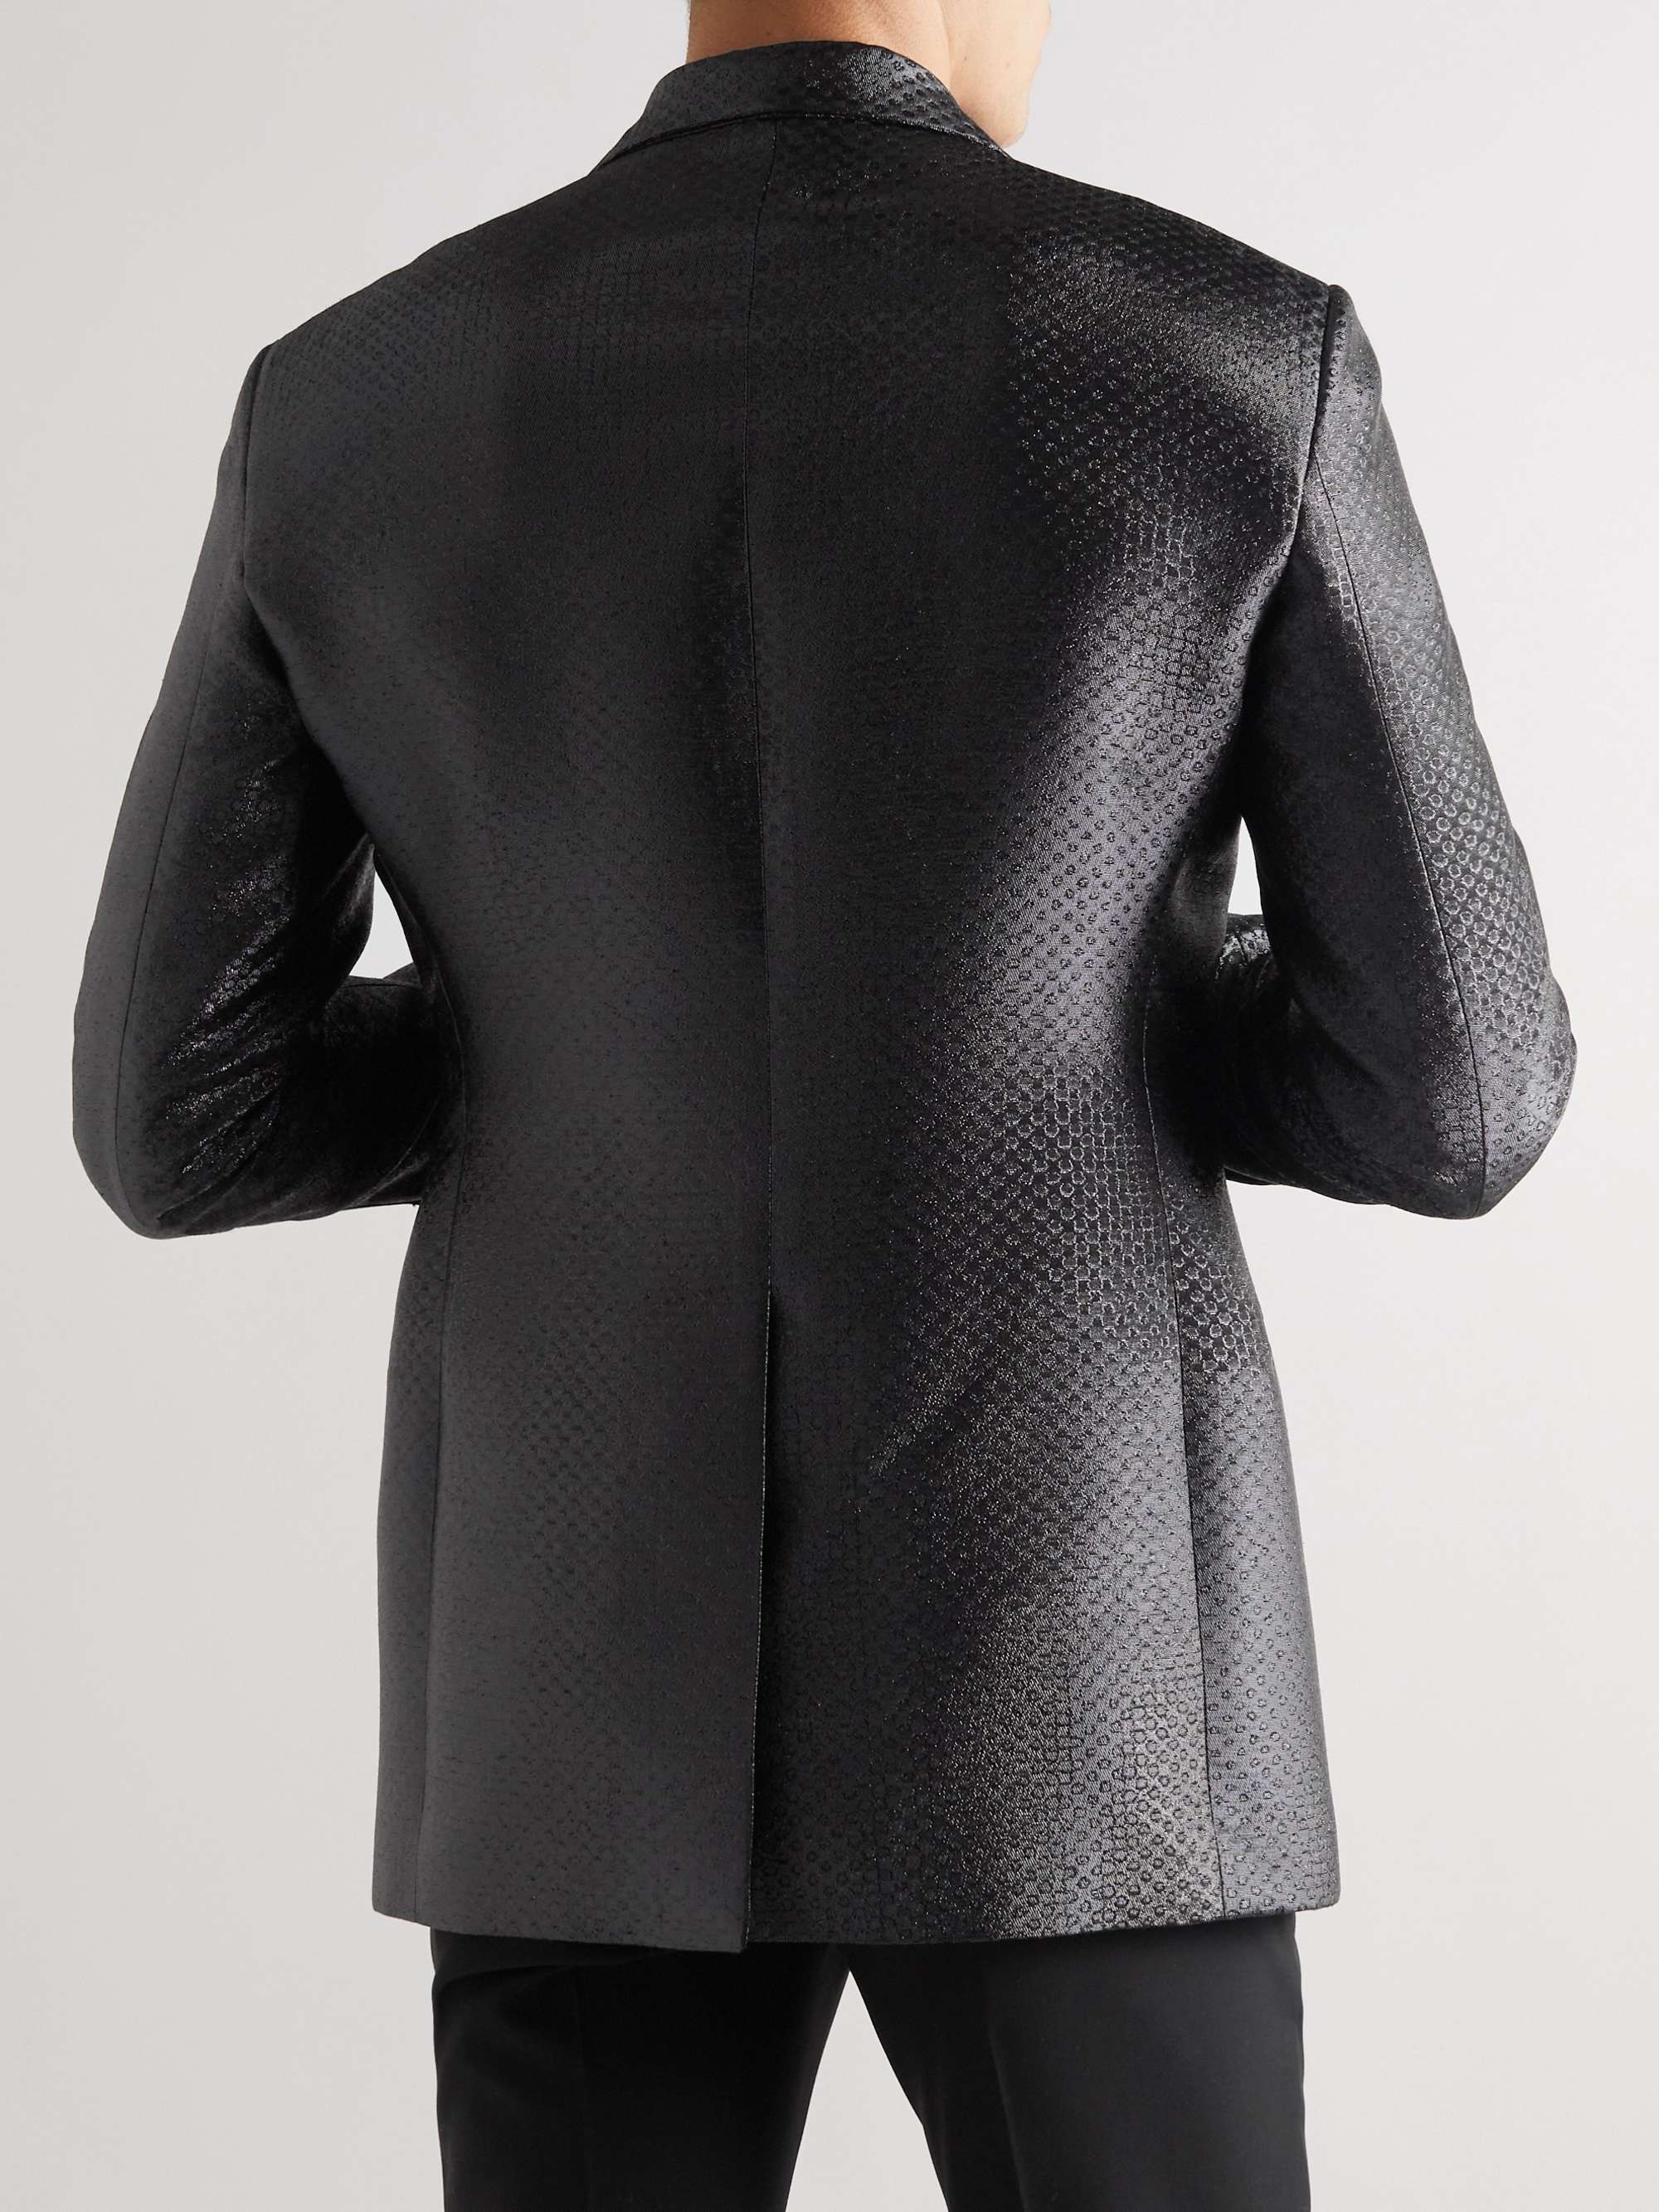 TOM FORD Slim-Fit Metallic Jacquard Tuxedo Jacket